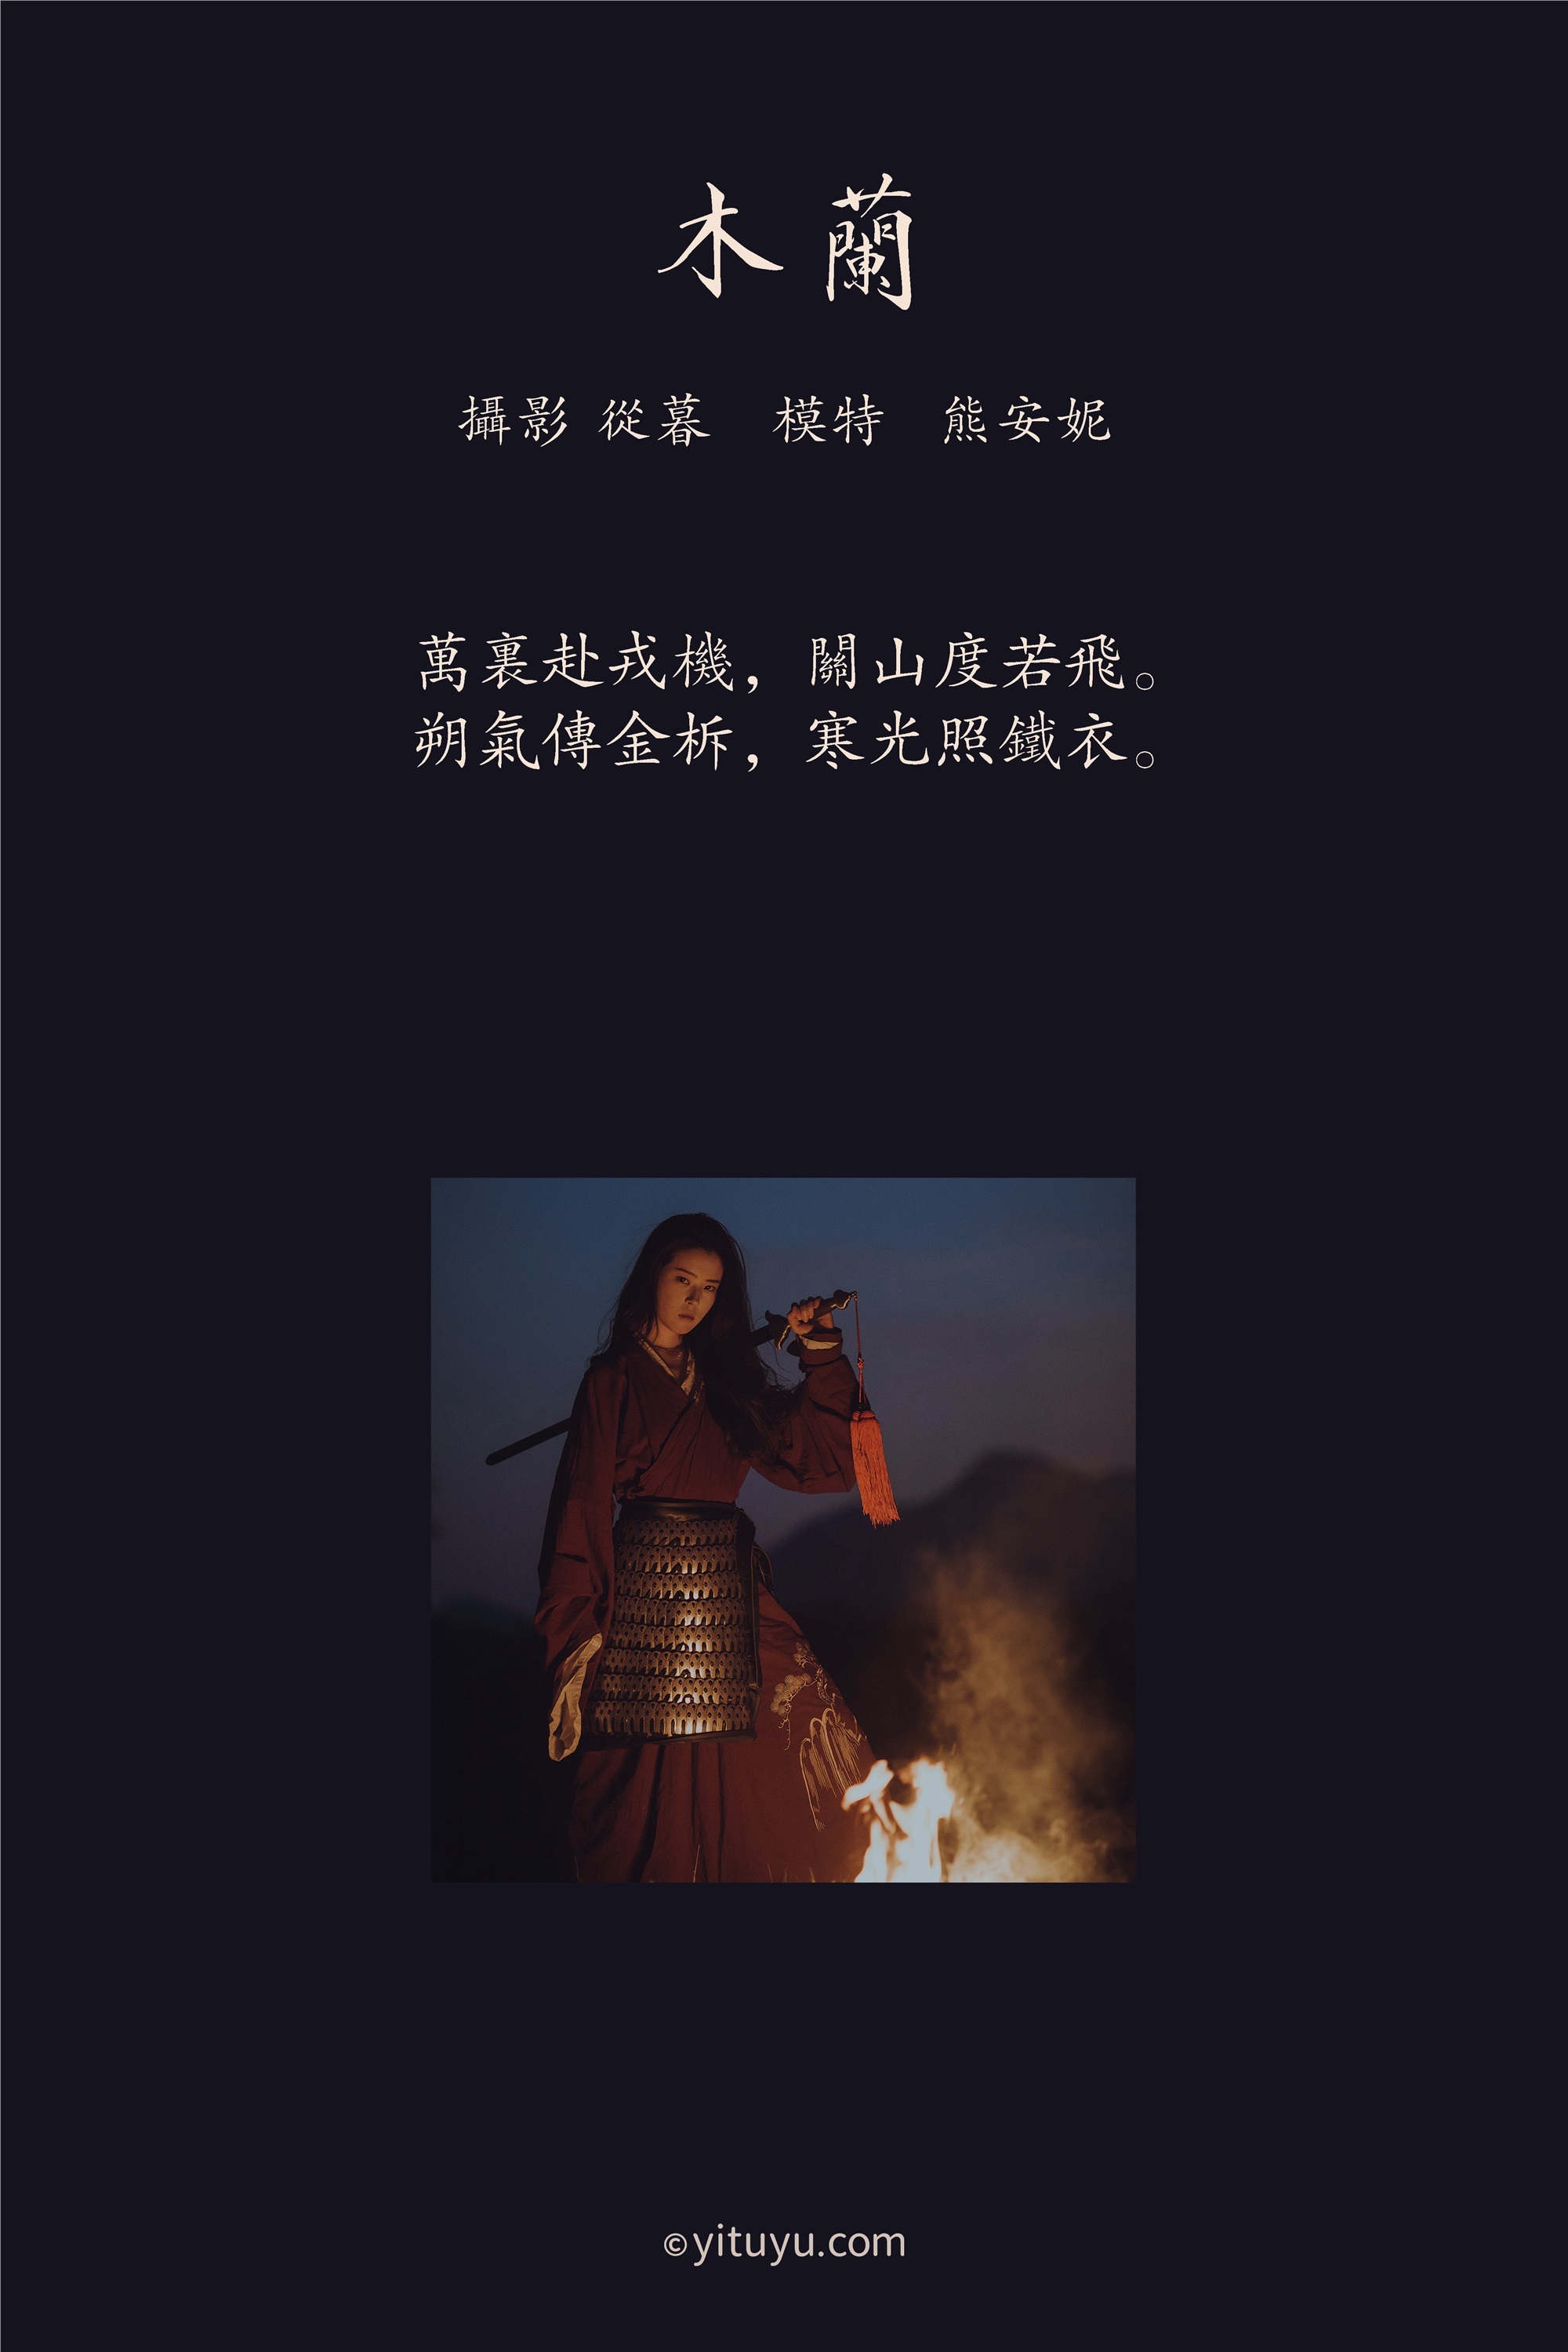 YITUYU Art Picture Language 2021.09.08 Mulan Xiong Annie